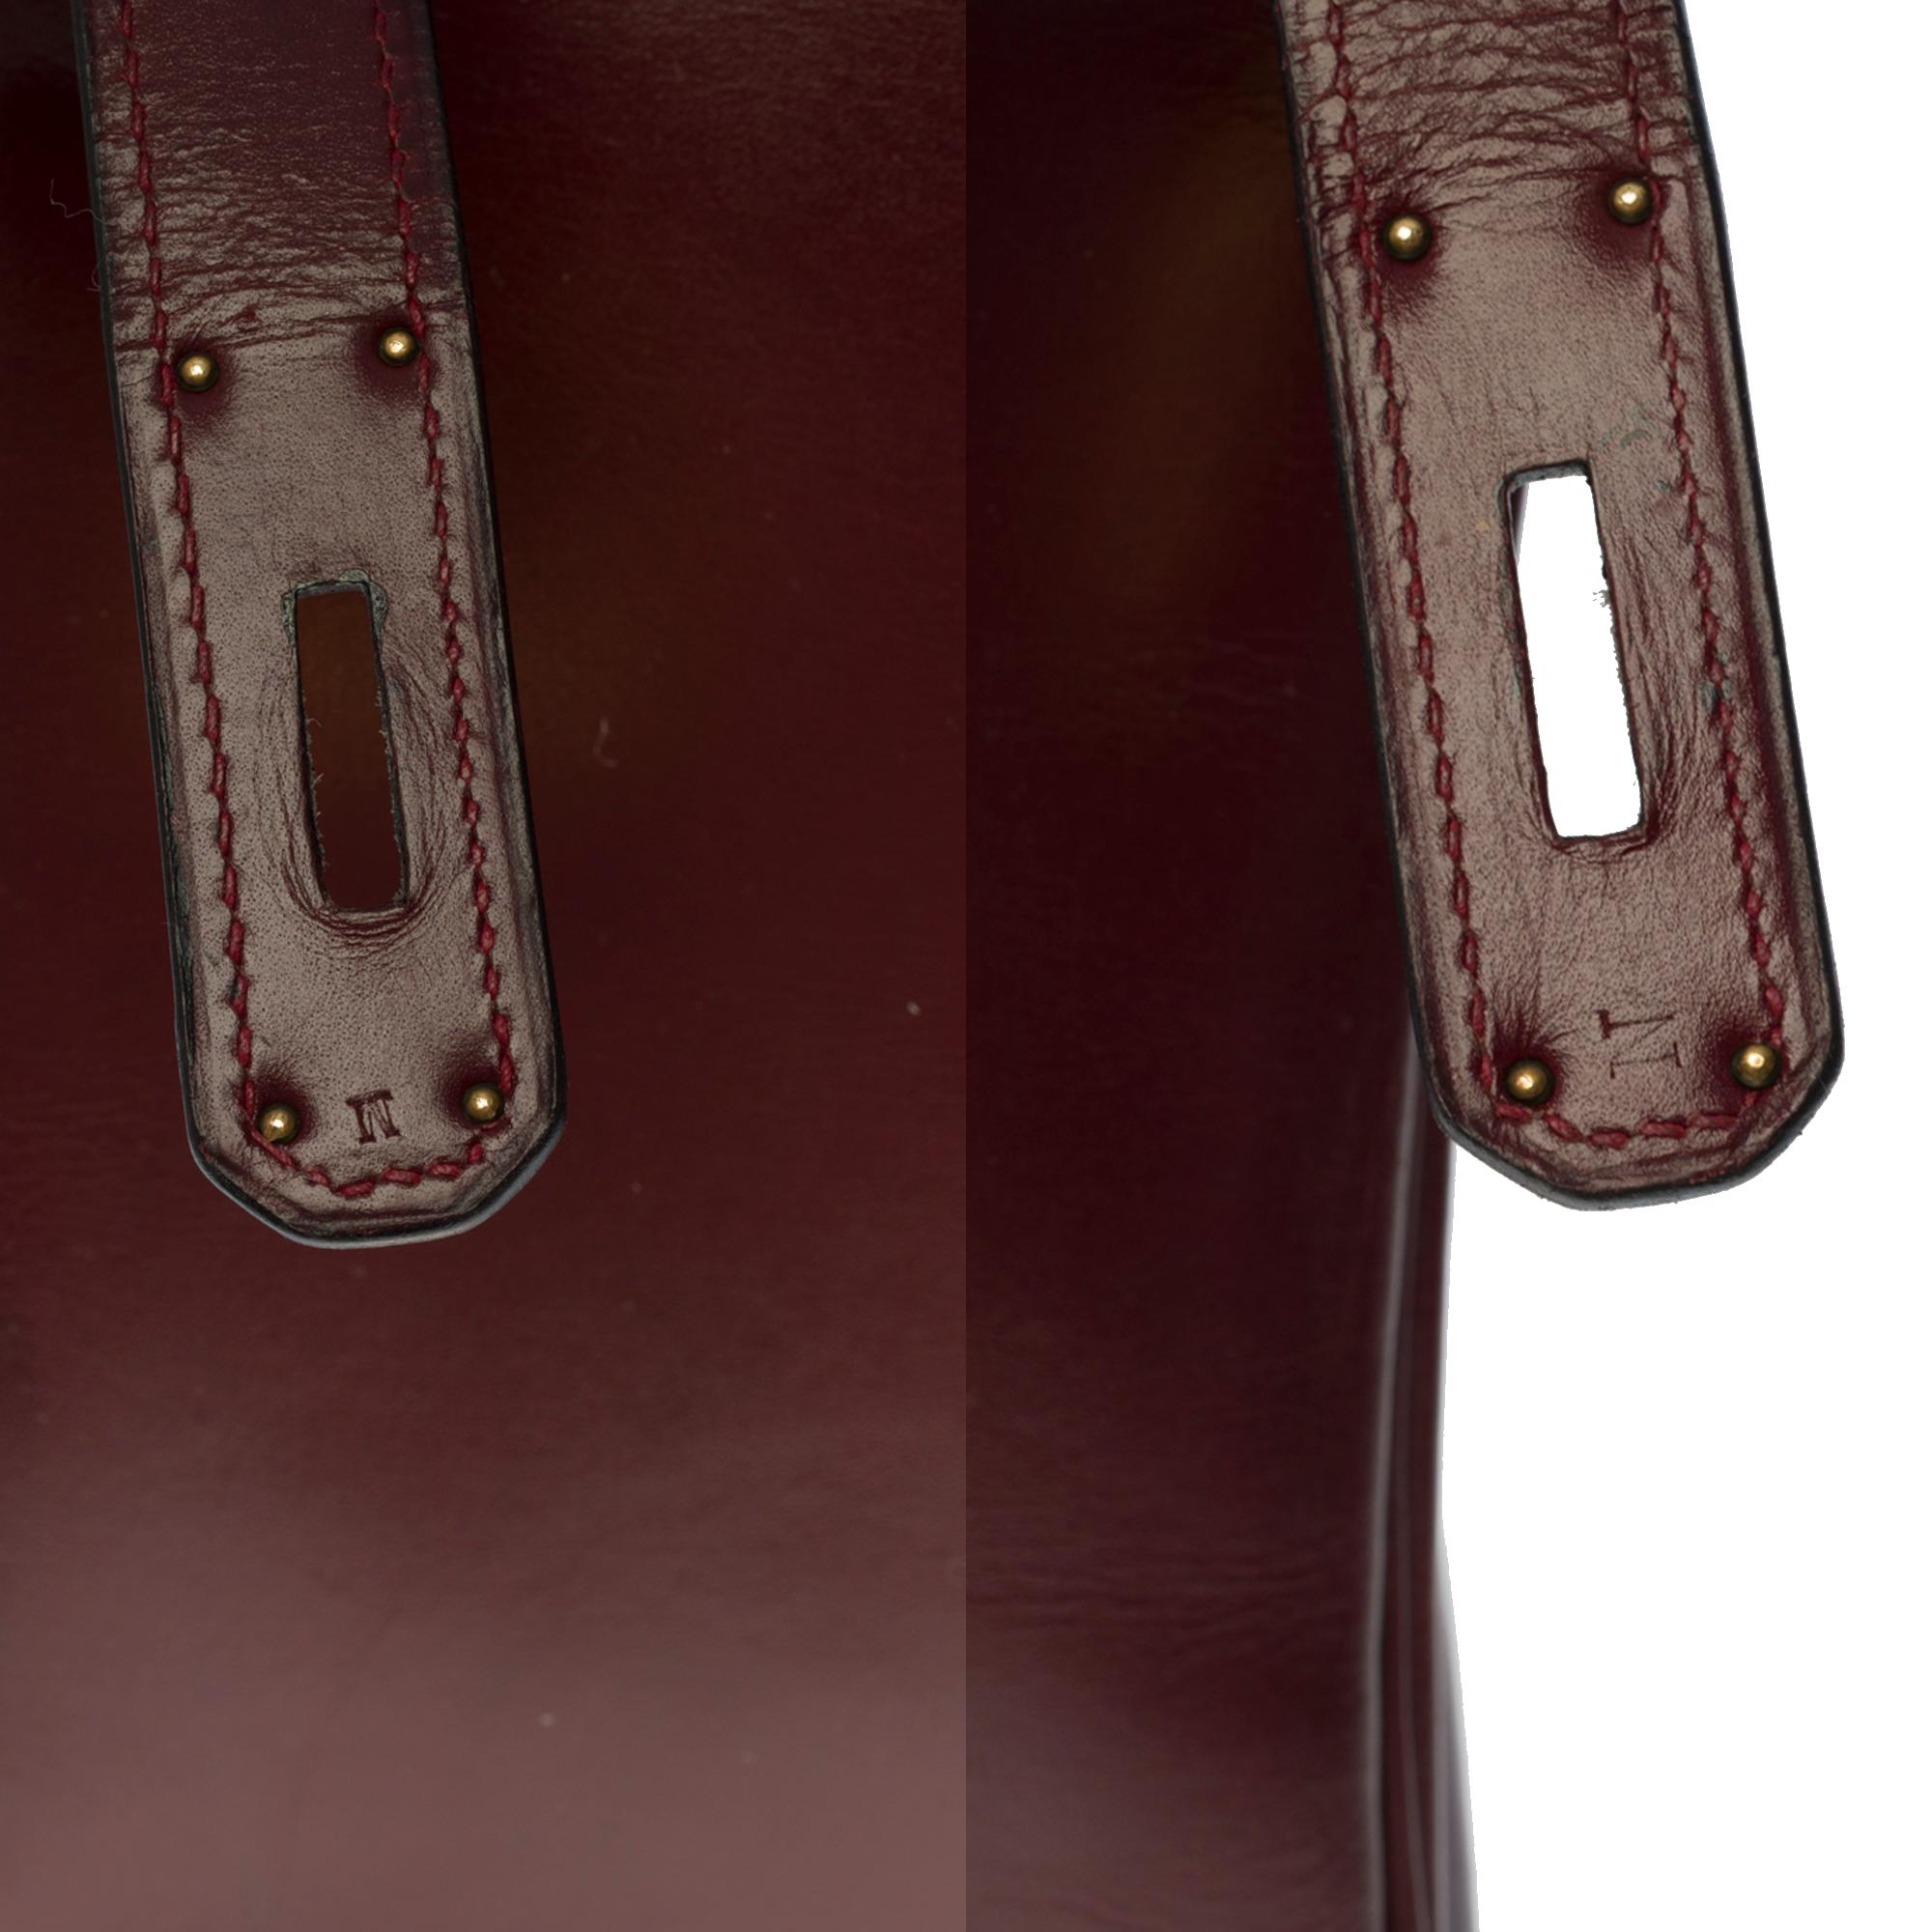 Black Hermes Kelly 28 retourne handbag strap in Rouge H (Burgundy) box calfskin, GHW